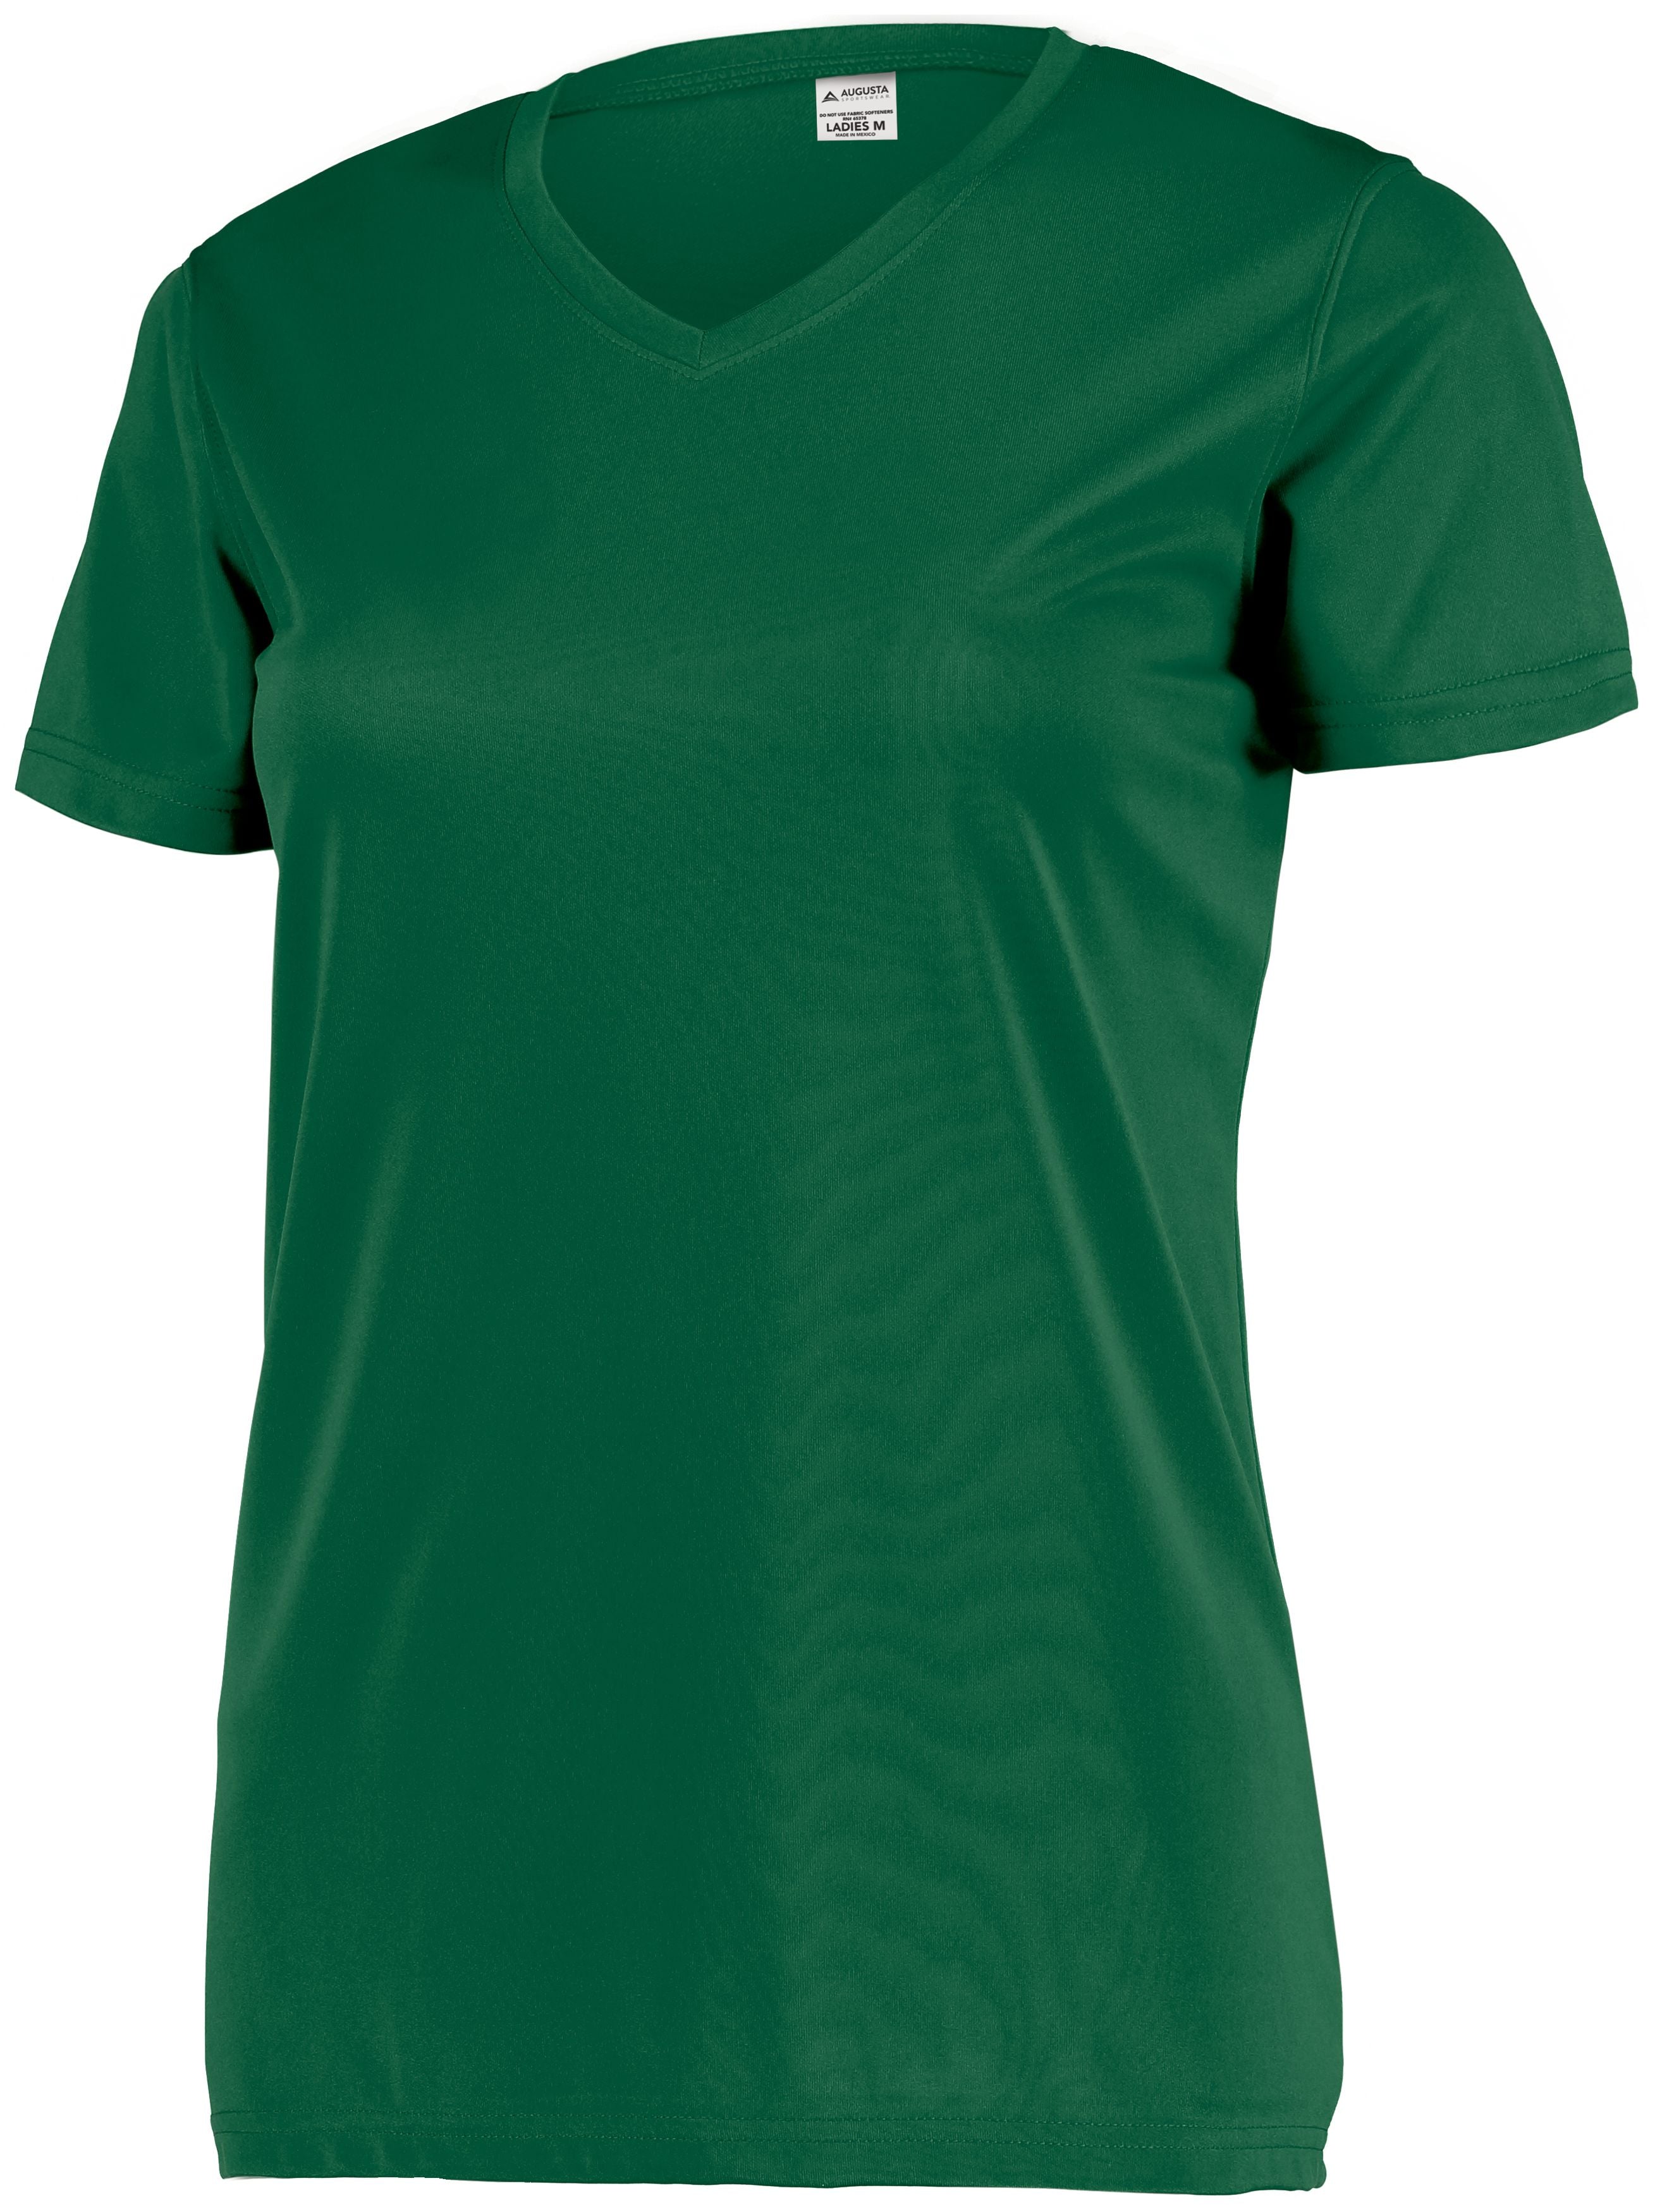 Augusta Sportswear Ladies Attain Wicking Set-In Sleeve Tee in Dark Green  -Part of the Ladies, Ladies-Tee-Shirt, T-Shirts, Augusta-Products, Shirts product lines at KanaleyCreations.com